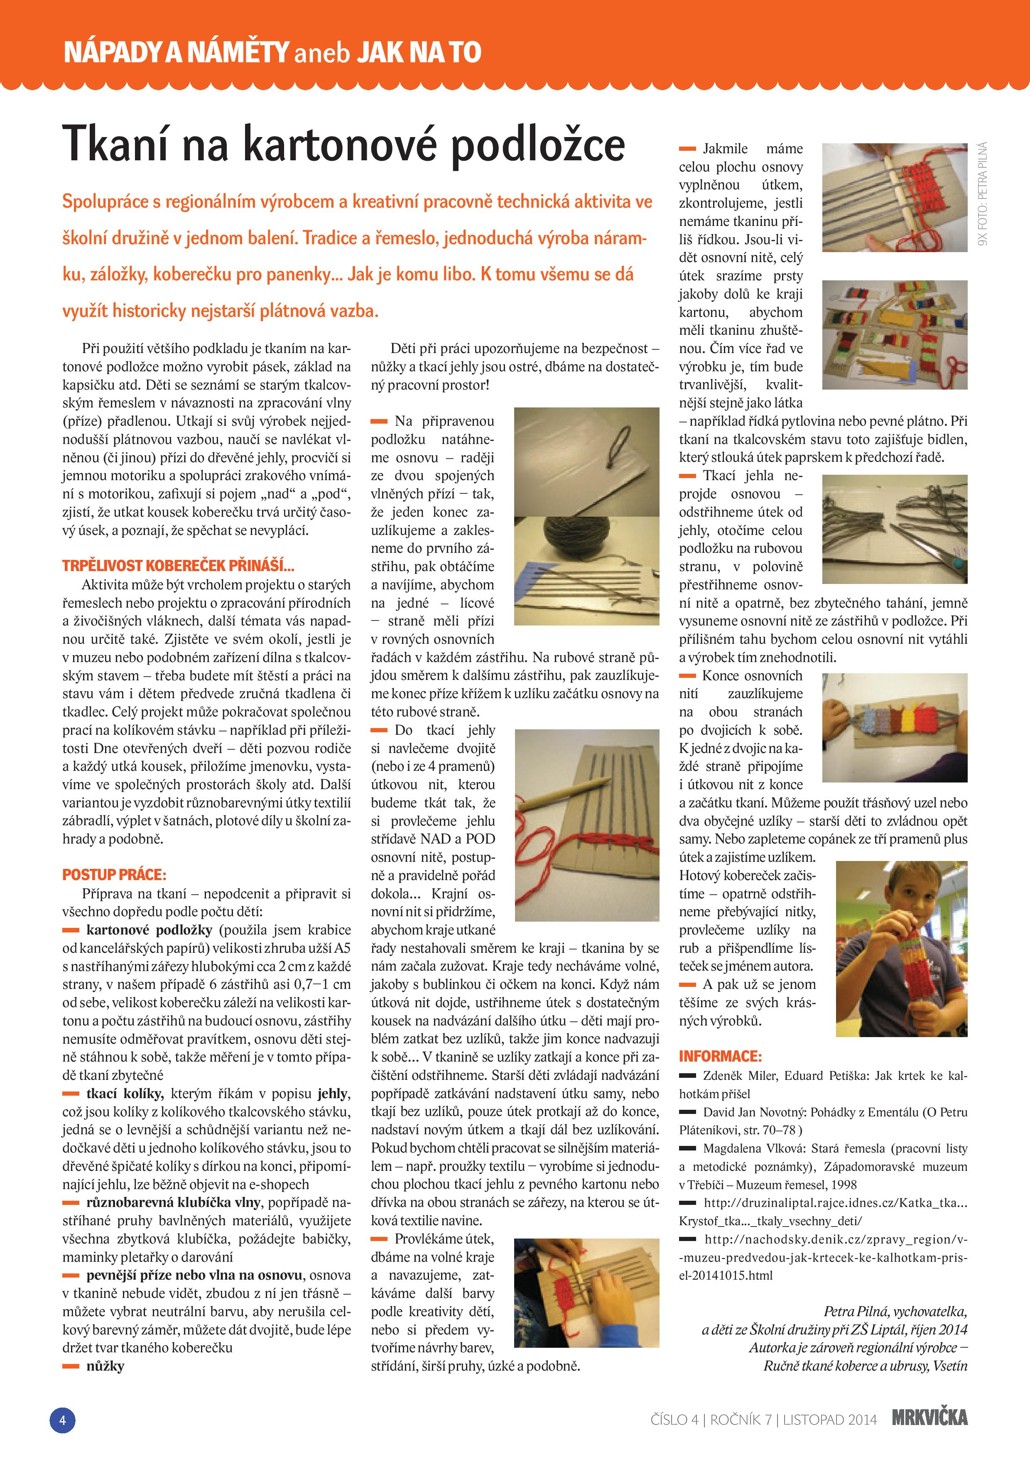 pavucina-mrkvicka-bulletin-04-2014-page-004